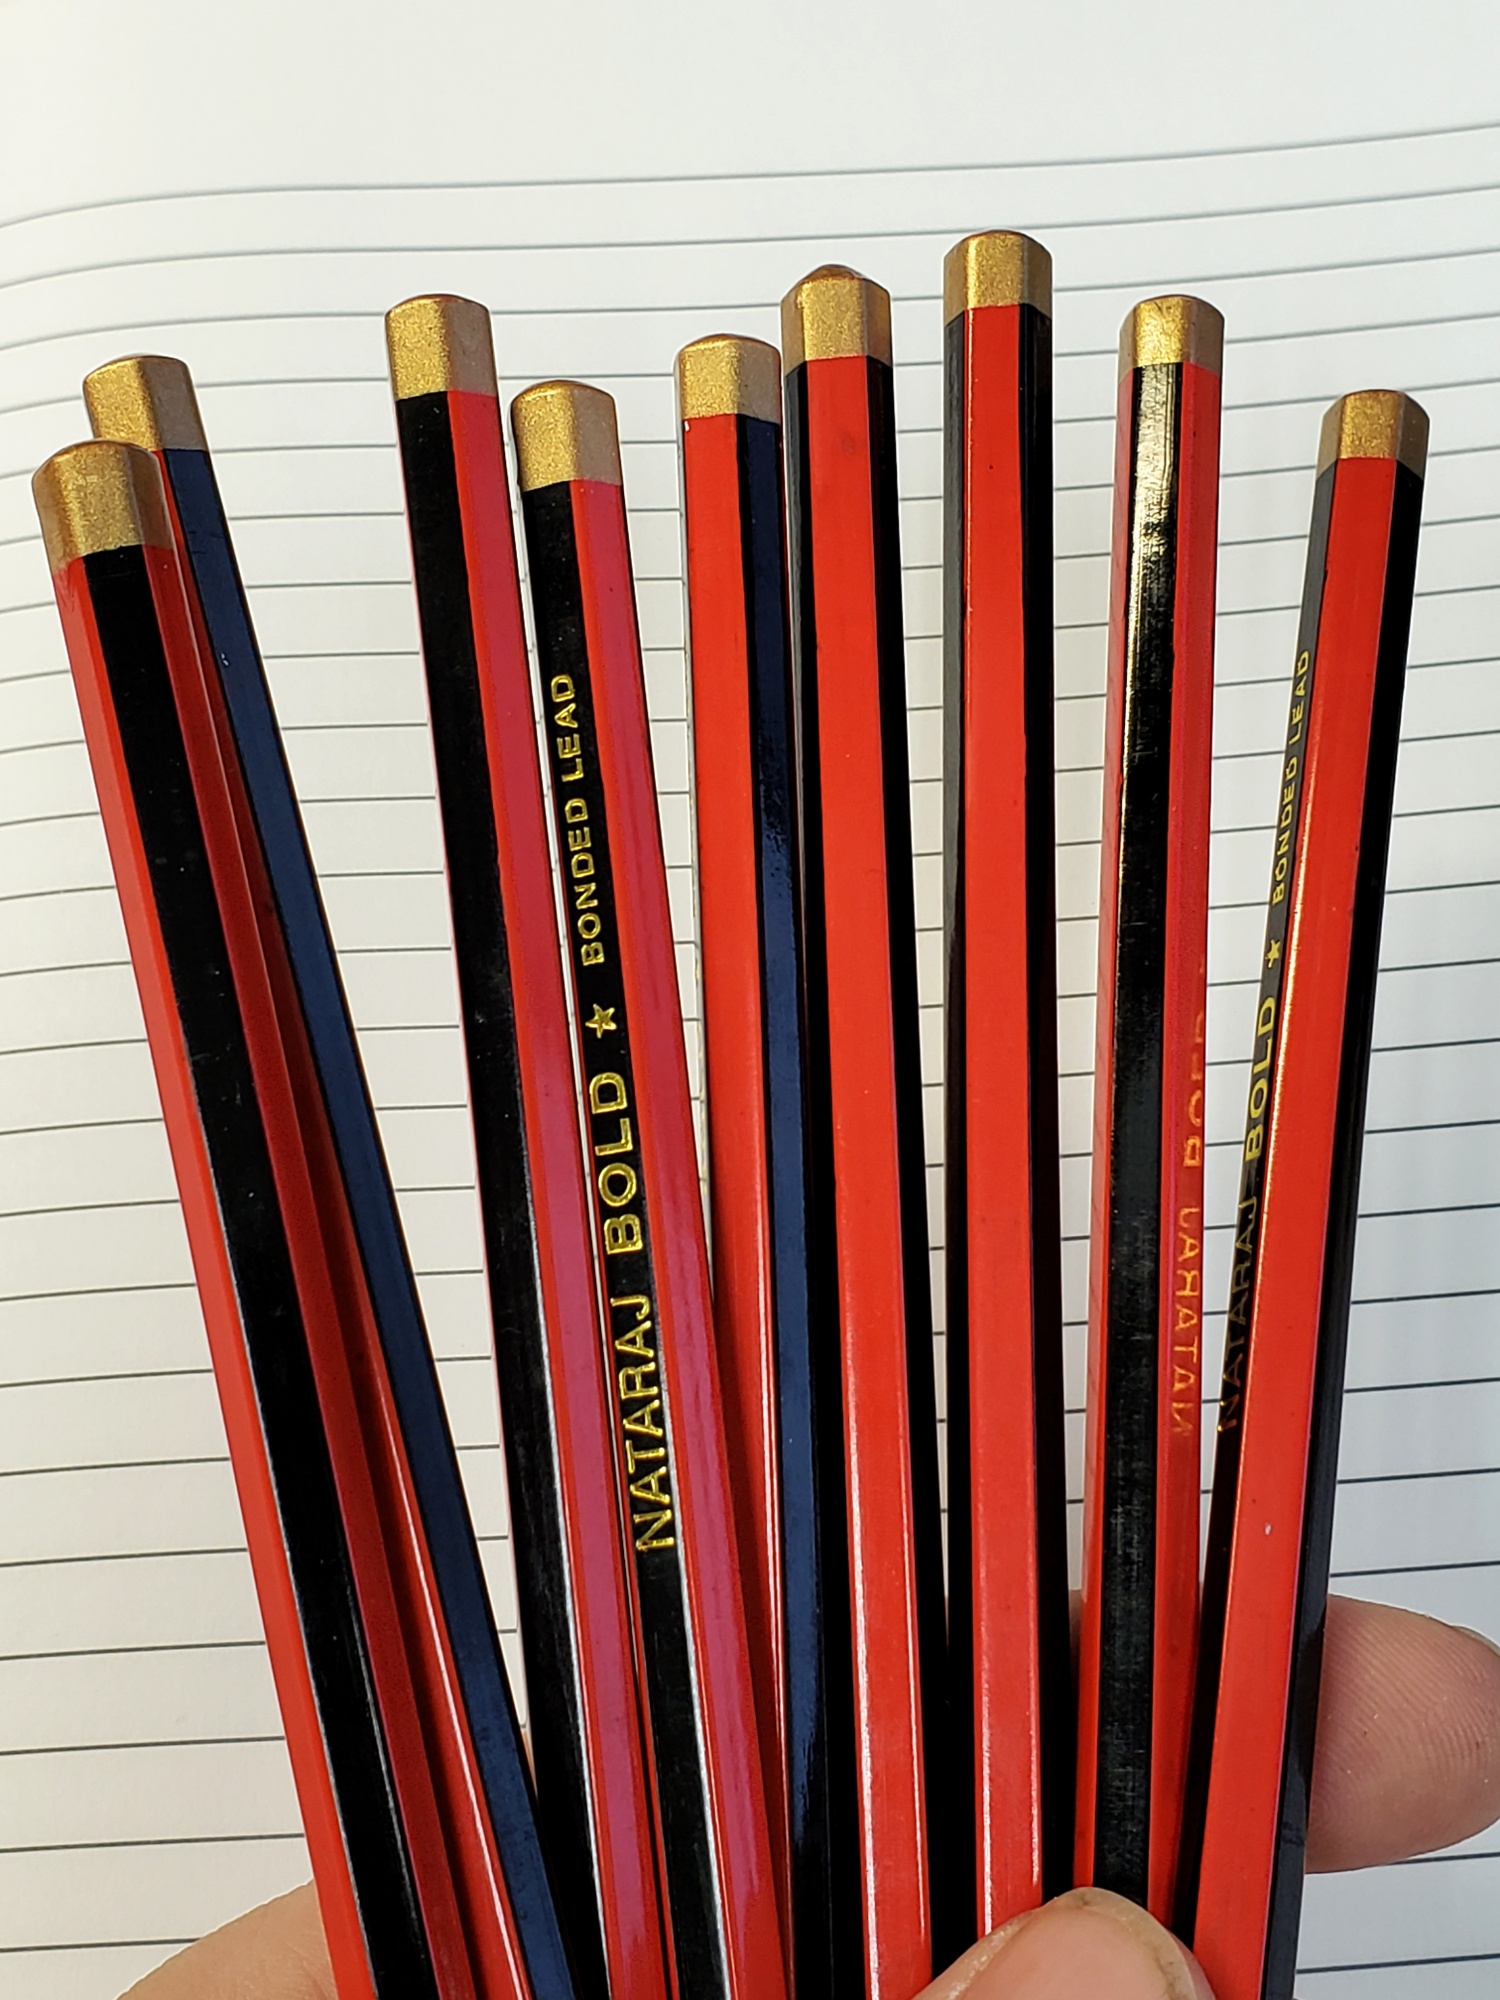 10 Pencils NATRAJ HB 621 BOLD WRITING HEXAGONAL PENCILS FREE ERASER & SHARPENER 